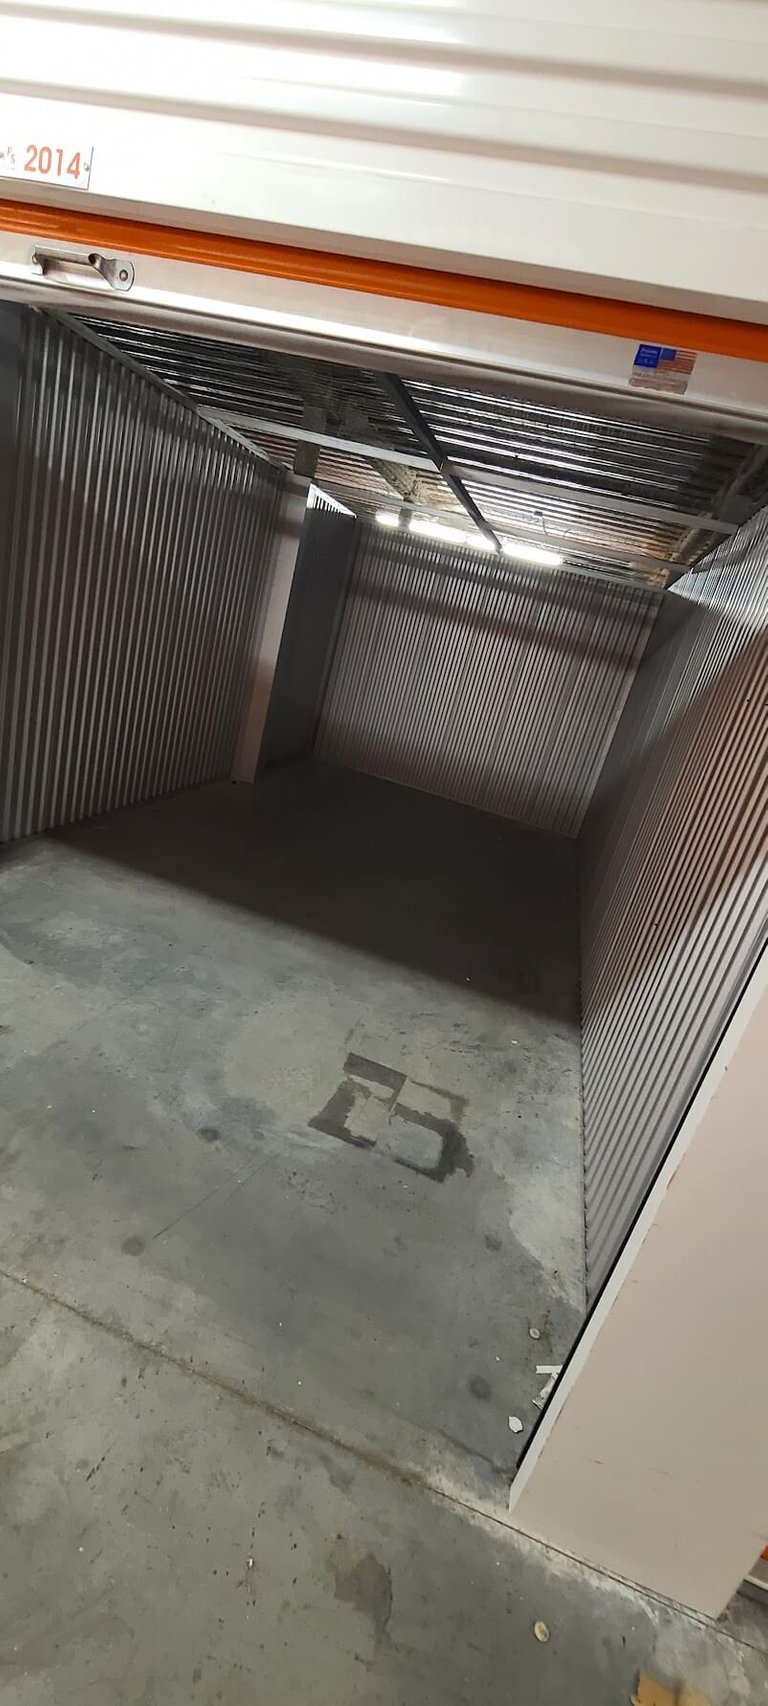 The empty storage unit